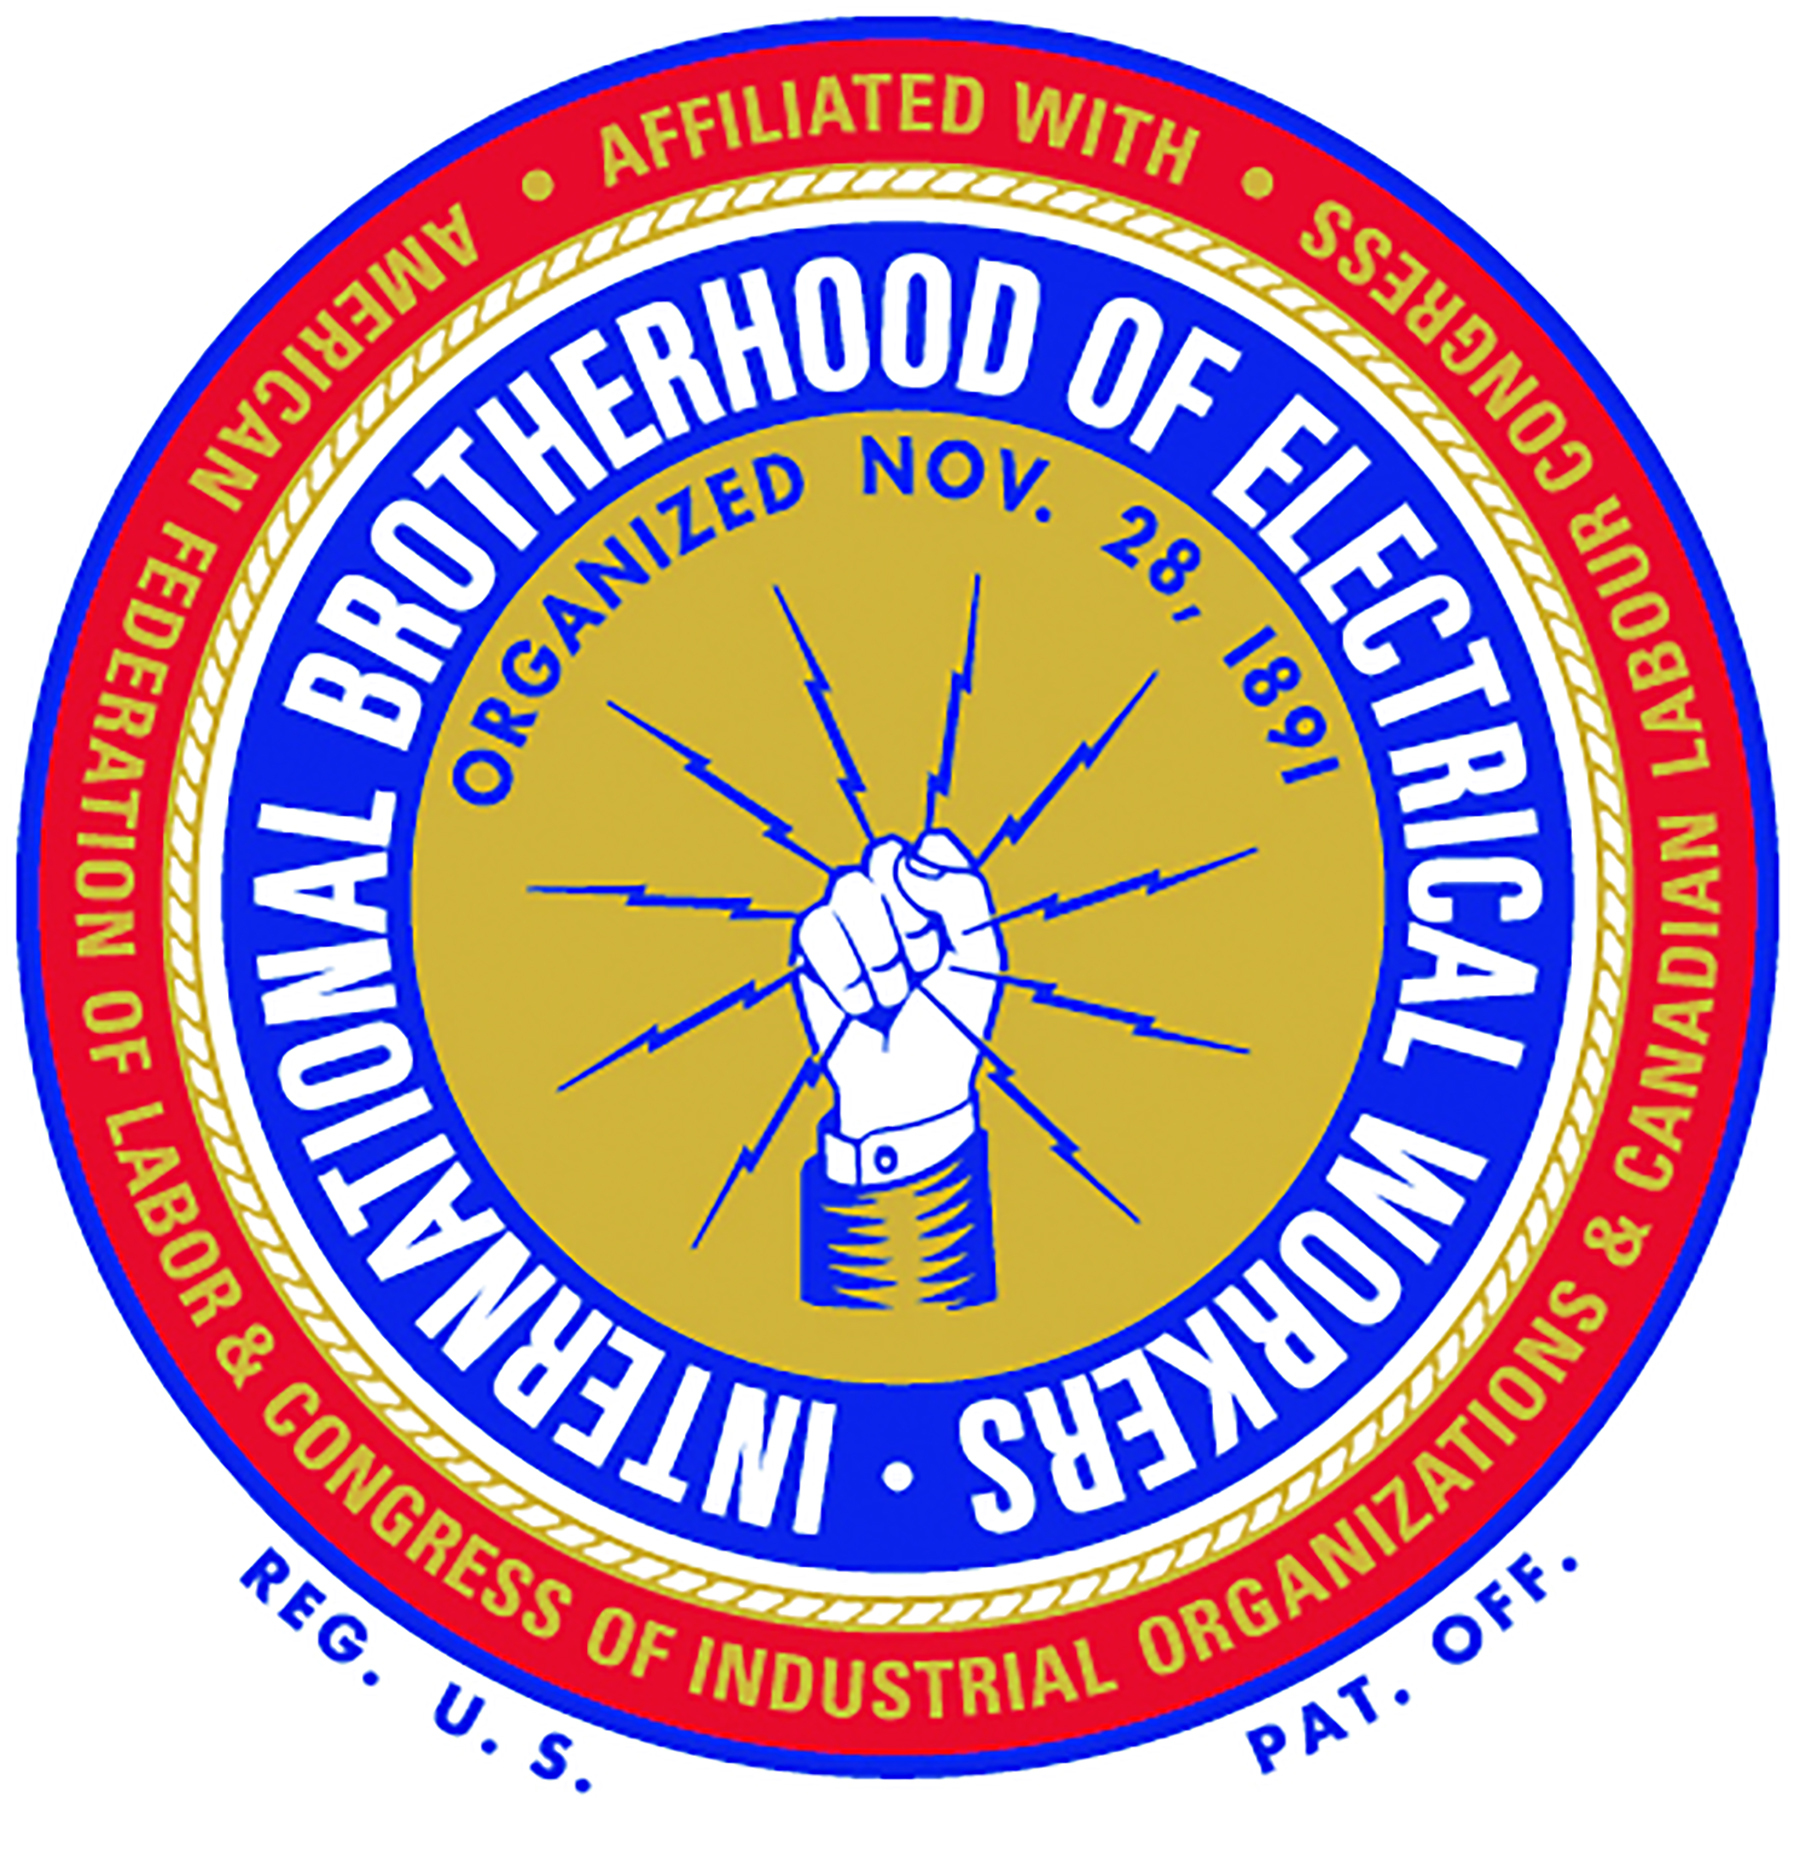 Brotherhood of Electrical Workers logo